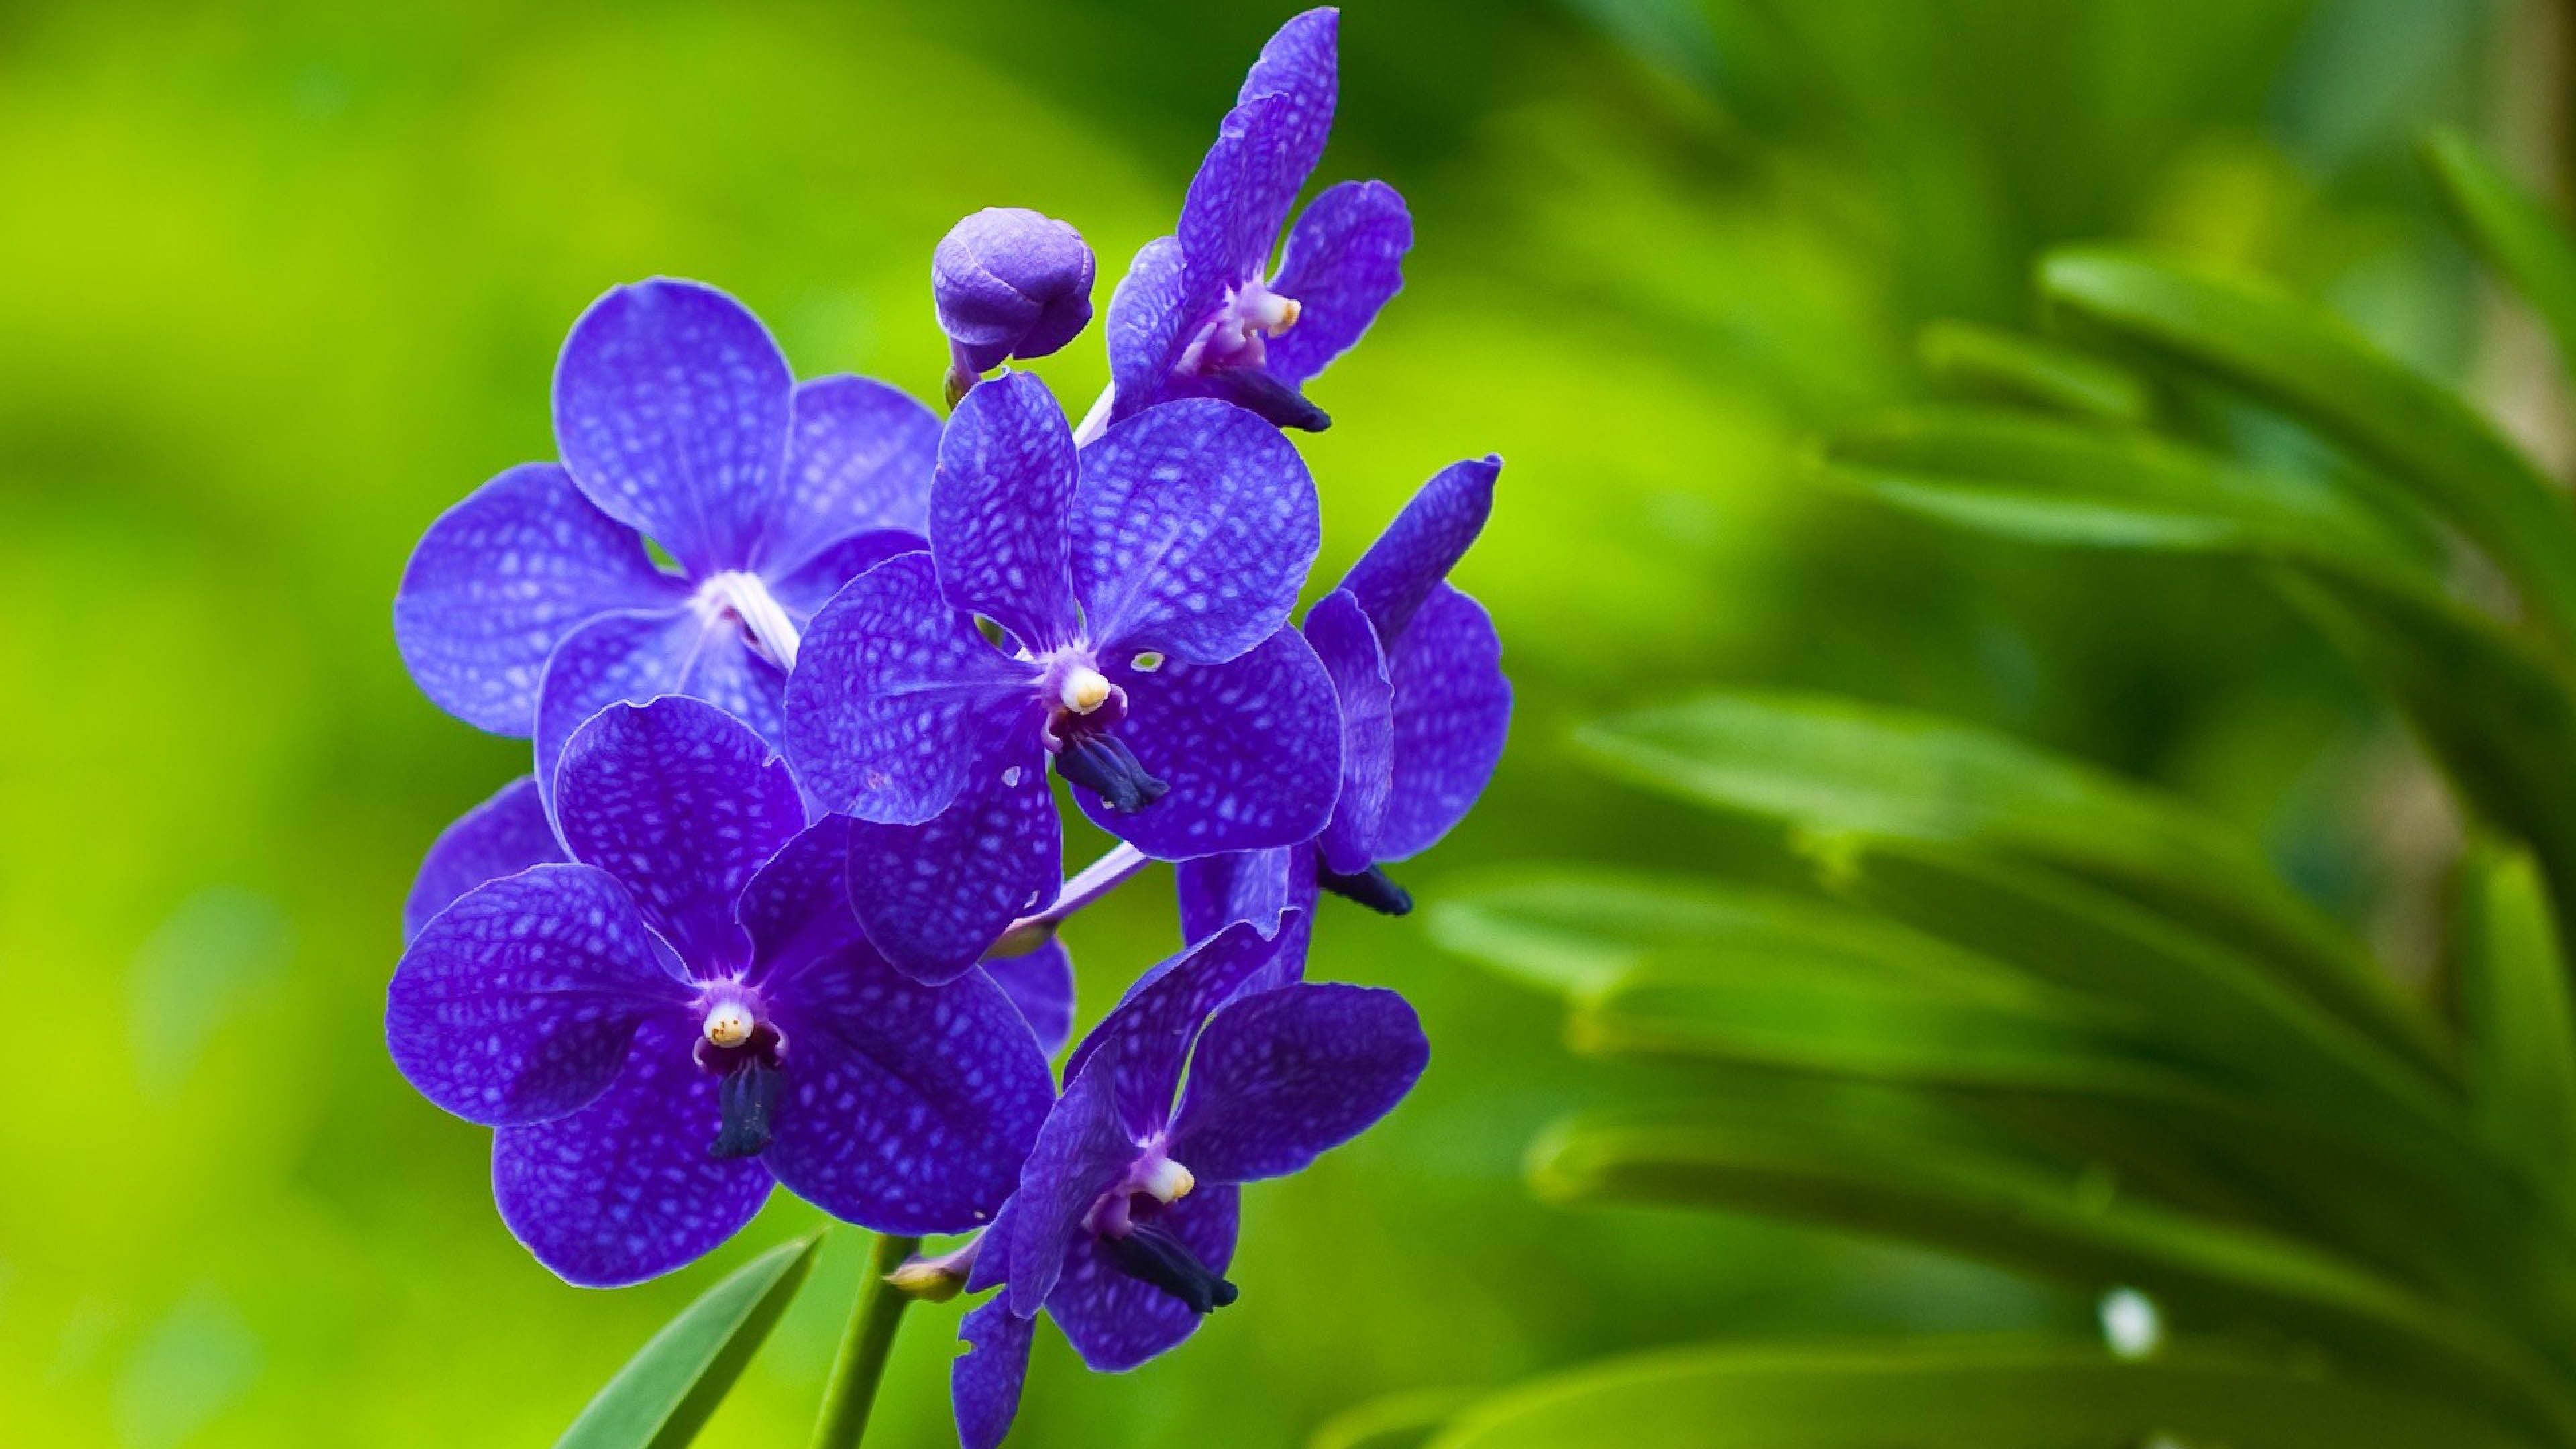 Amazing Close Up On Purple Flower 16 9 Ultra HD. Flower Iphone Wallpaper, Orchid Wallpaper, Flower Wallpaper